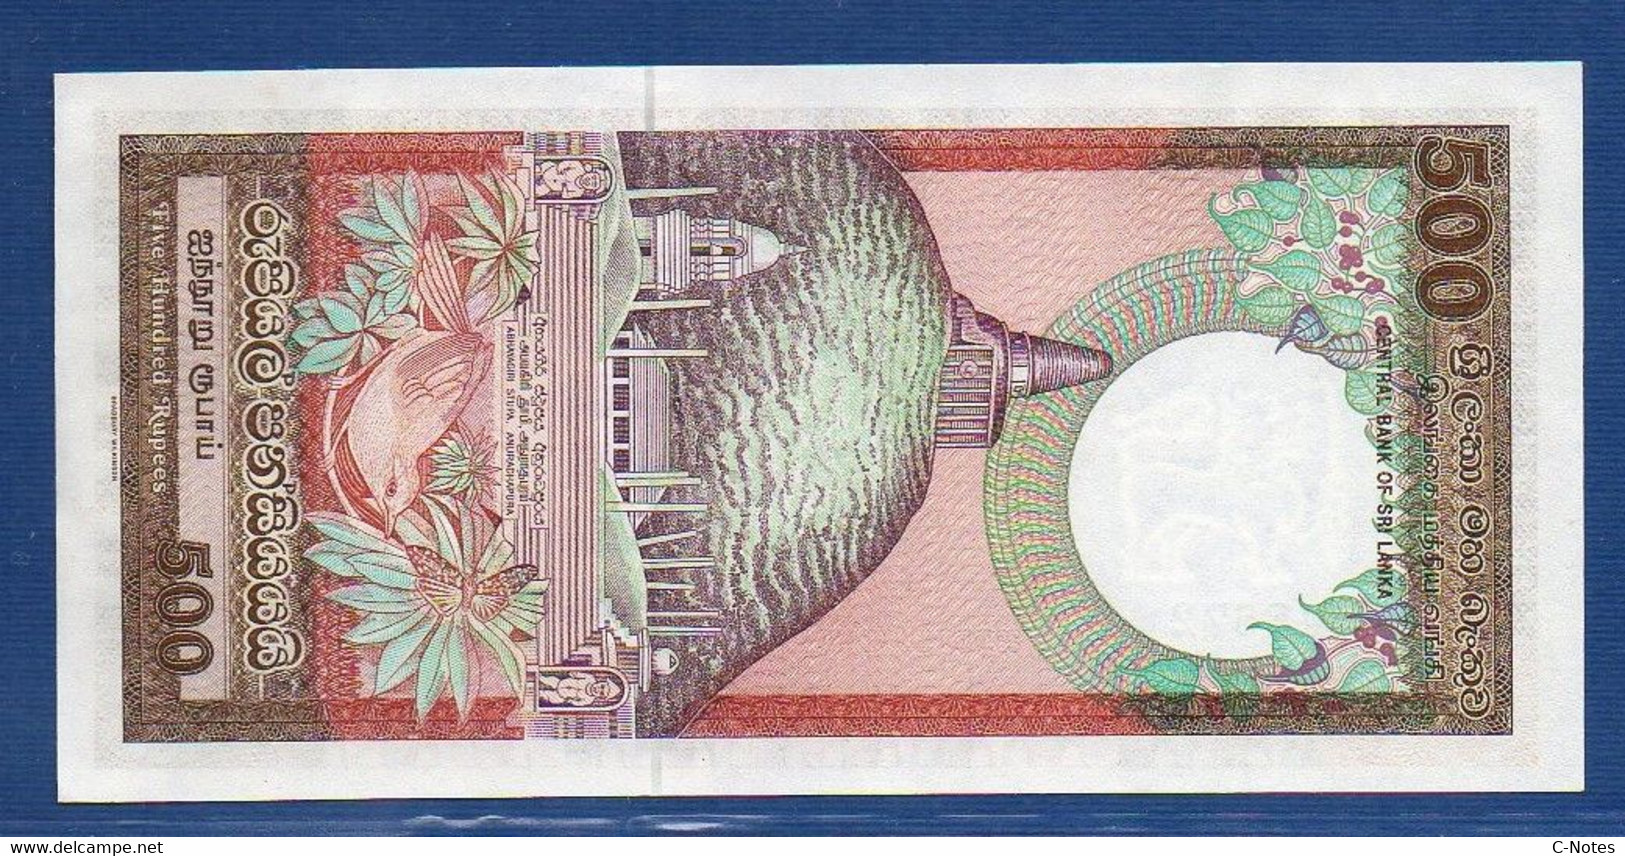 SRI LANKA - P.100a – 500 Rupees 1987 UNC, Serie B/4 448672 - Sri Lanka